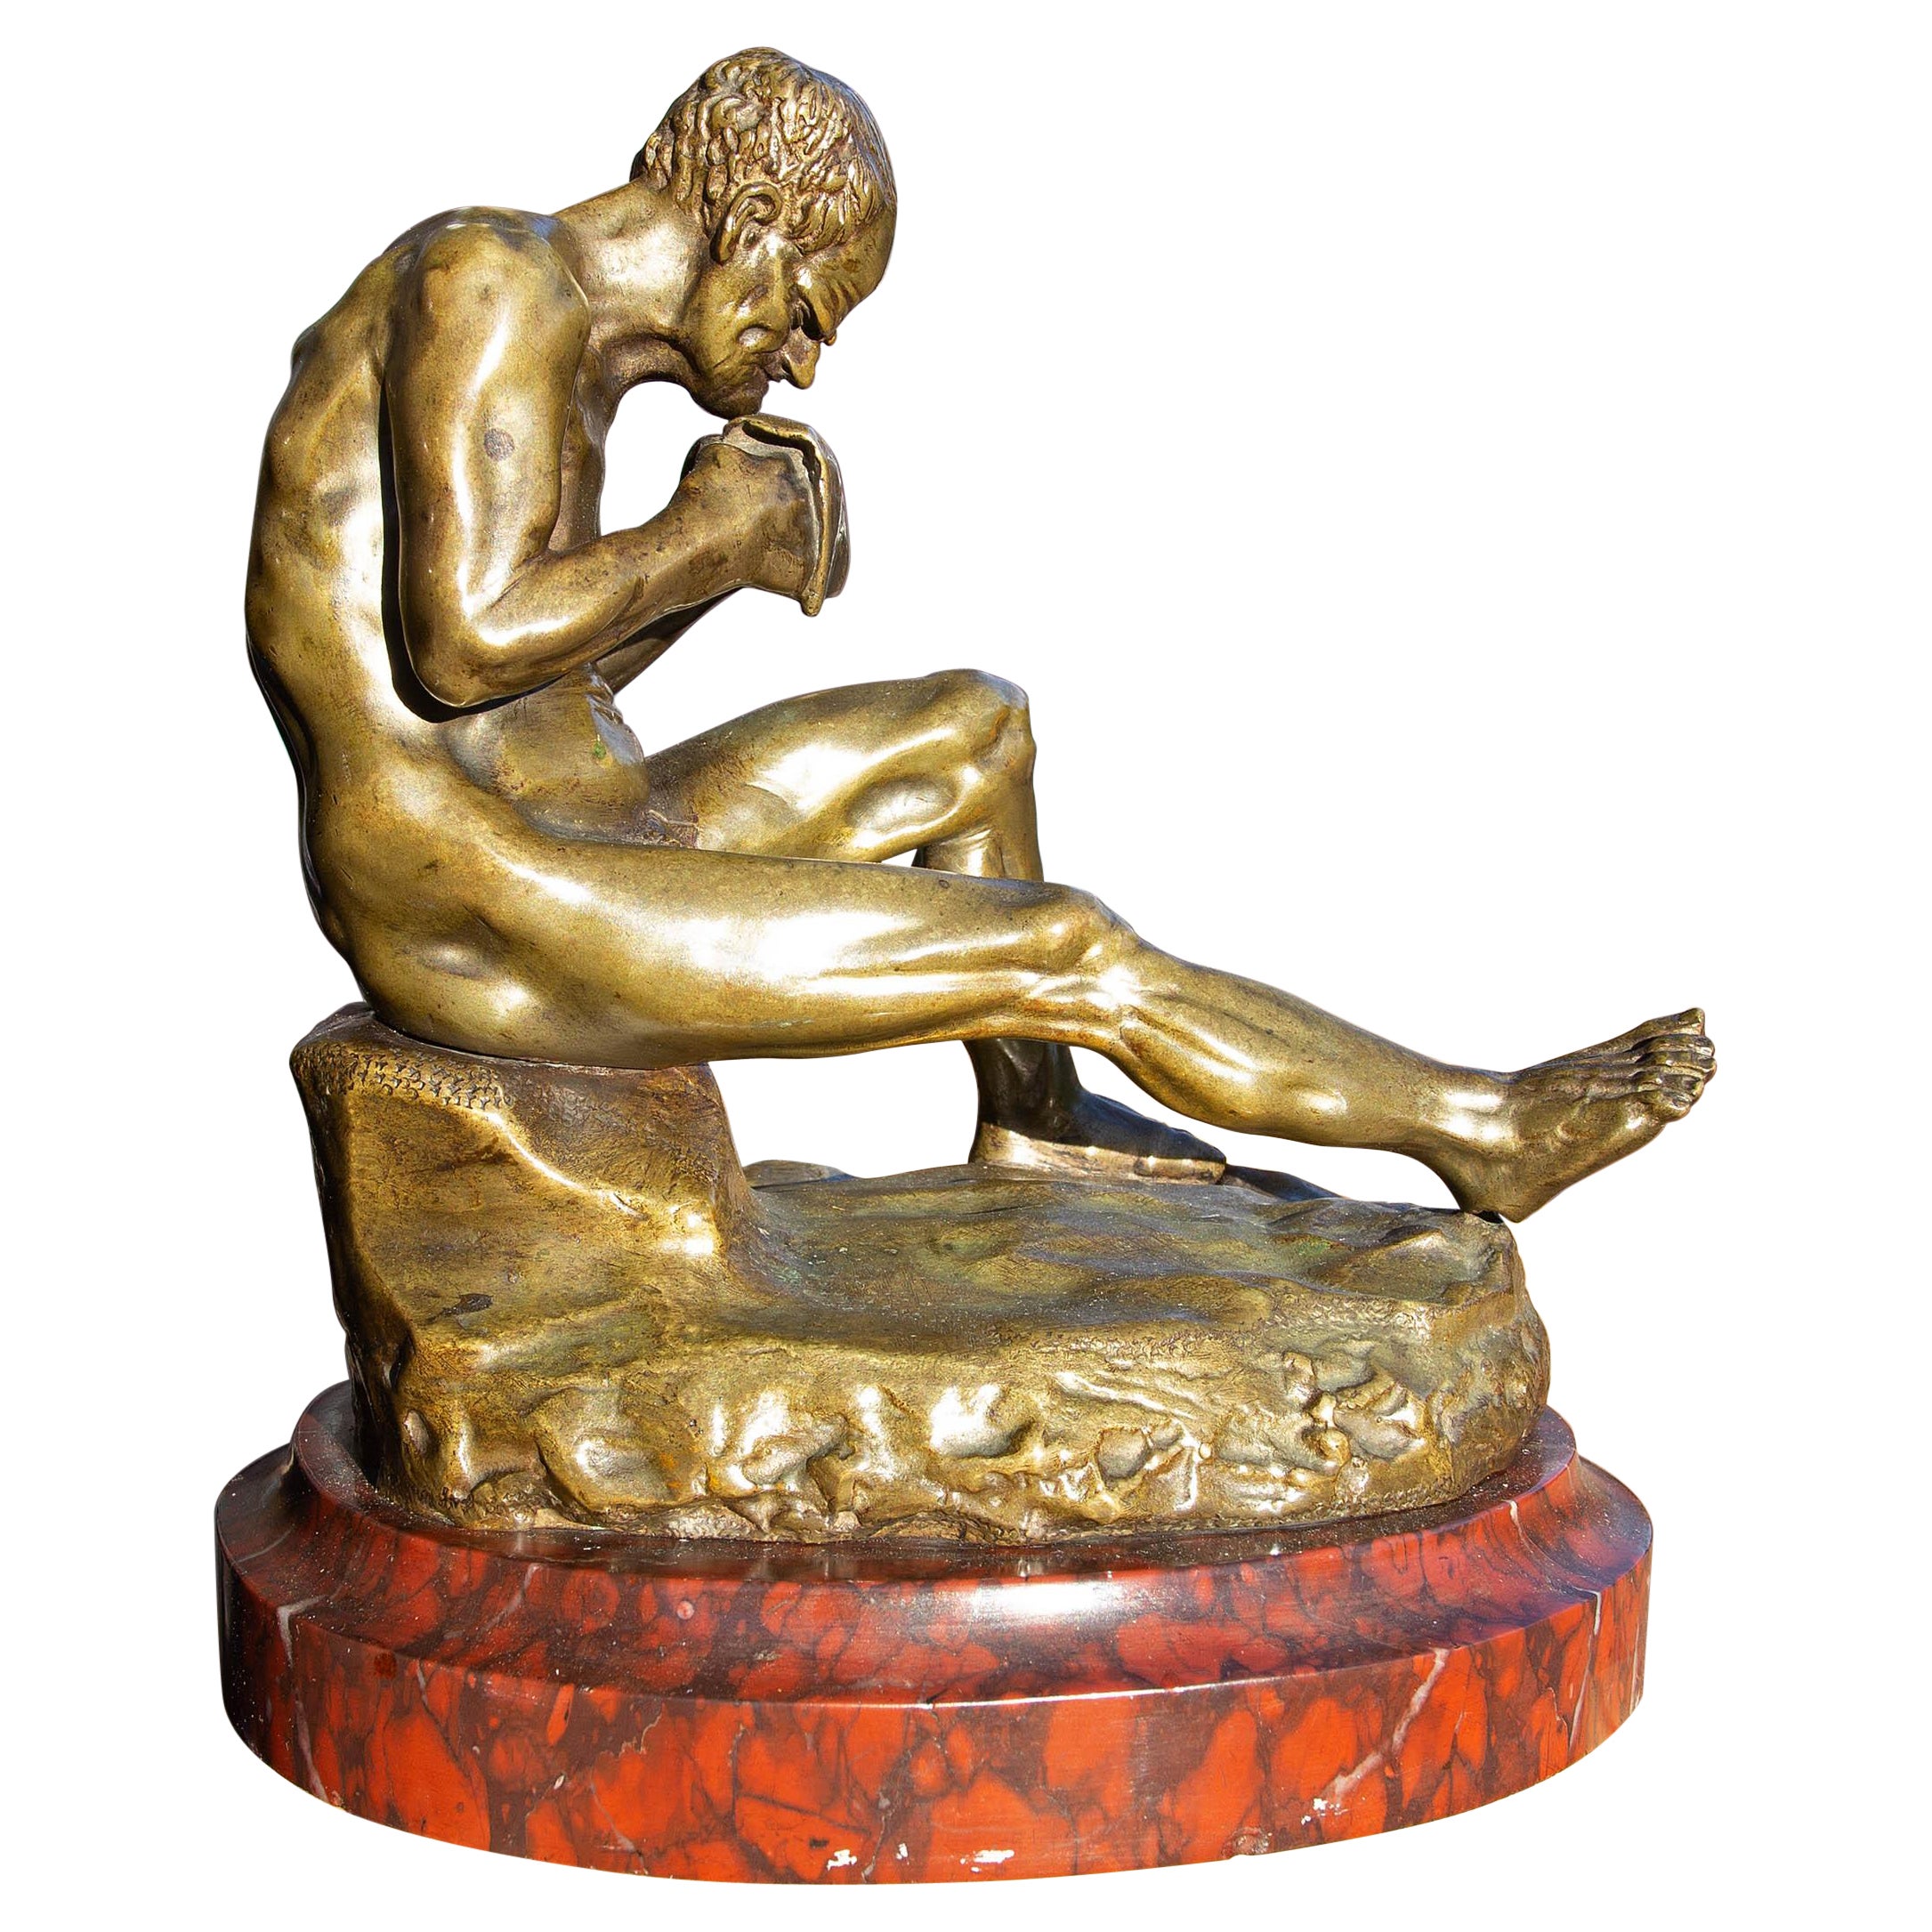 Unknown Nude Sculpture - 19th Century Bronze Sculpture "The Letter"